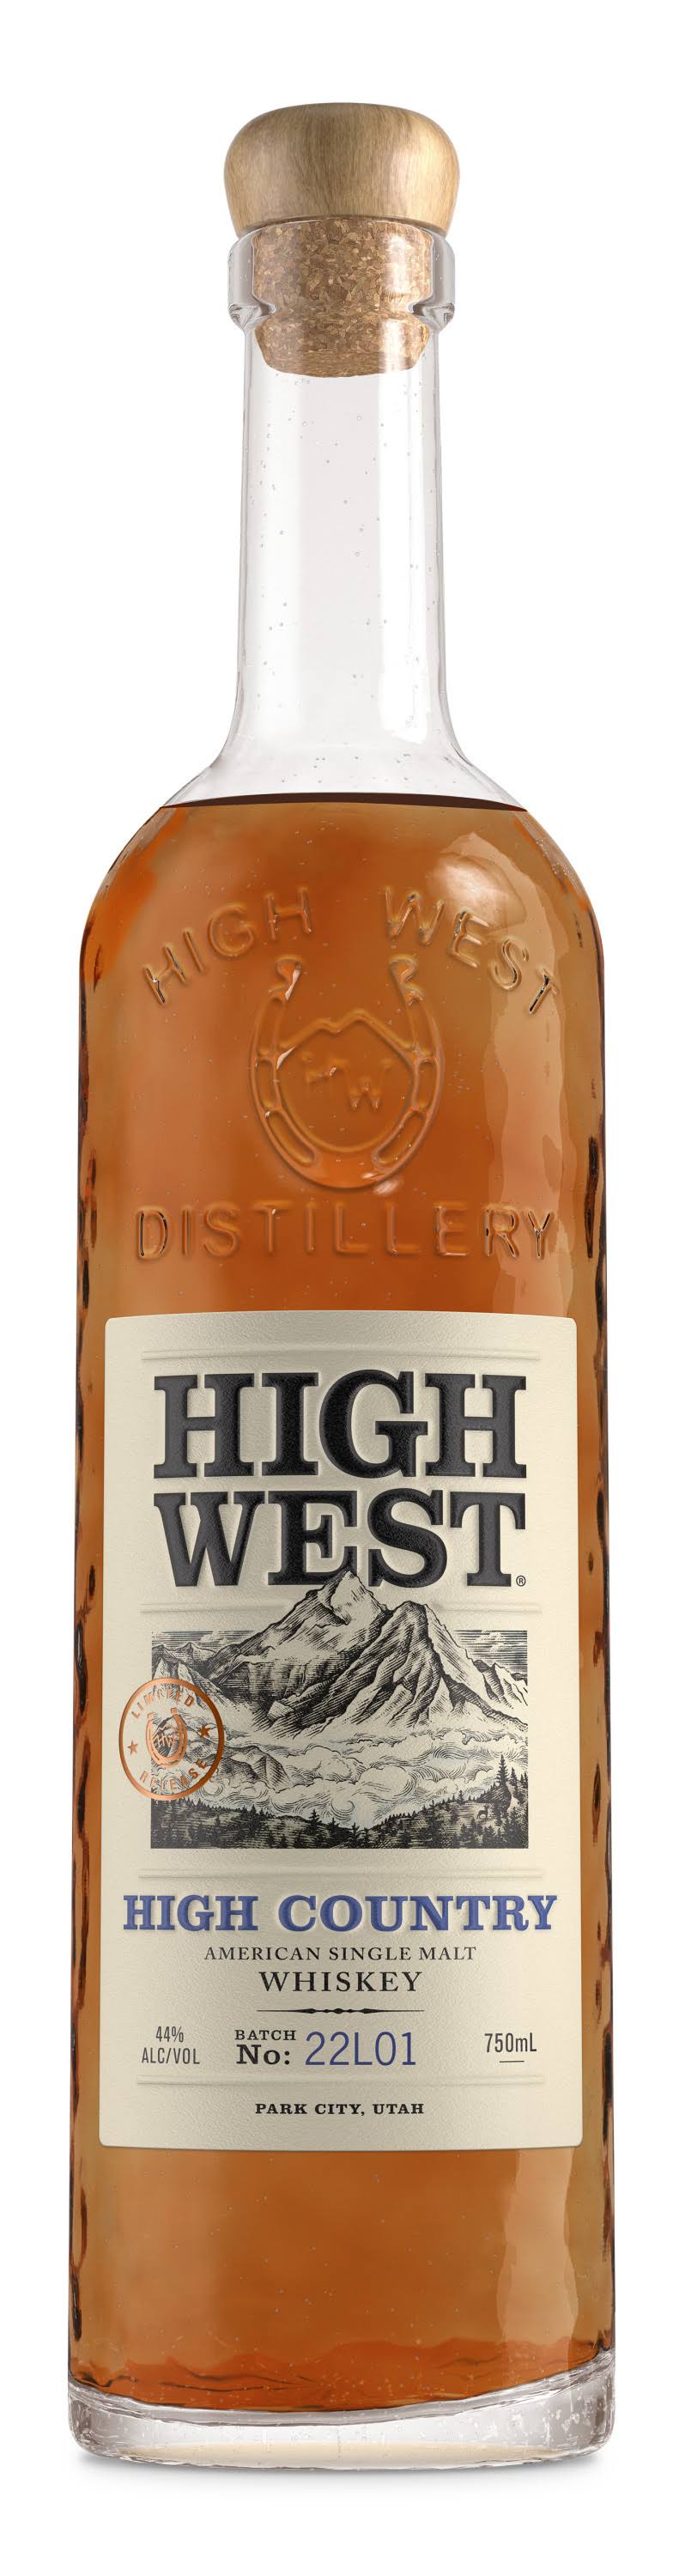 High West High Country American Single Malt Whiskey 750ml